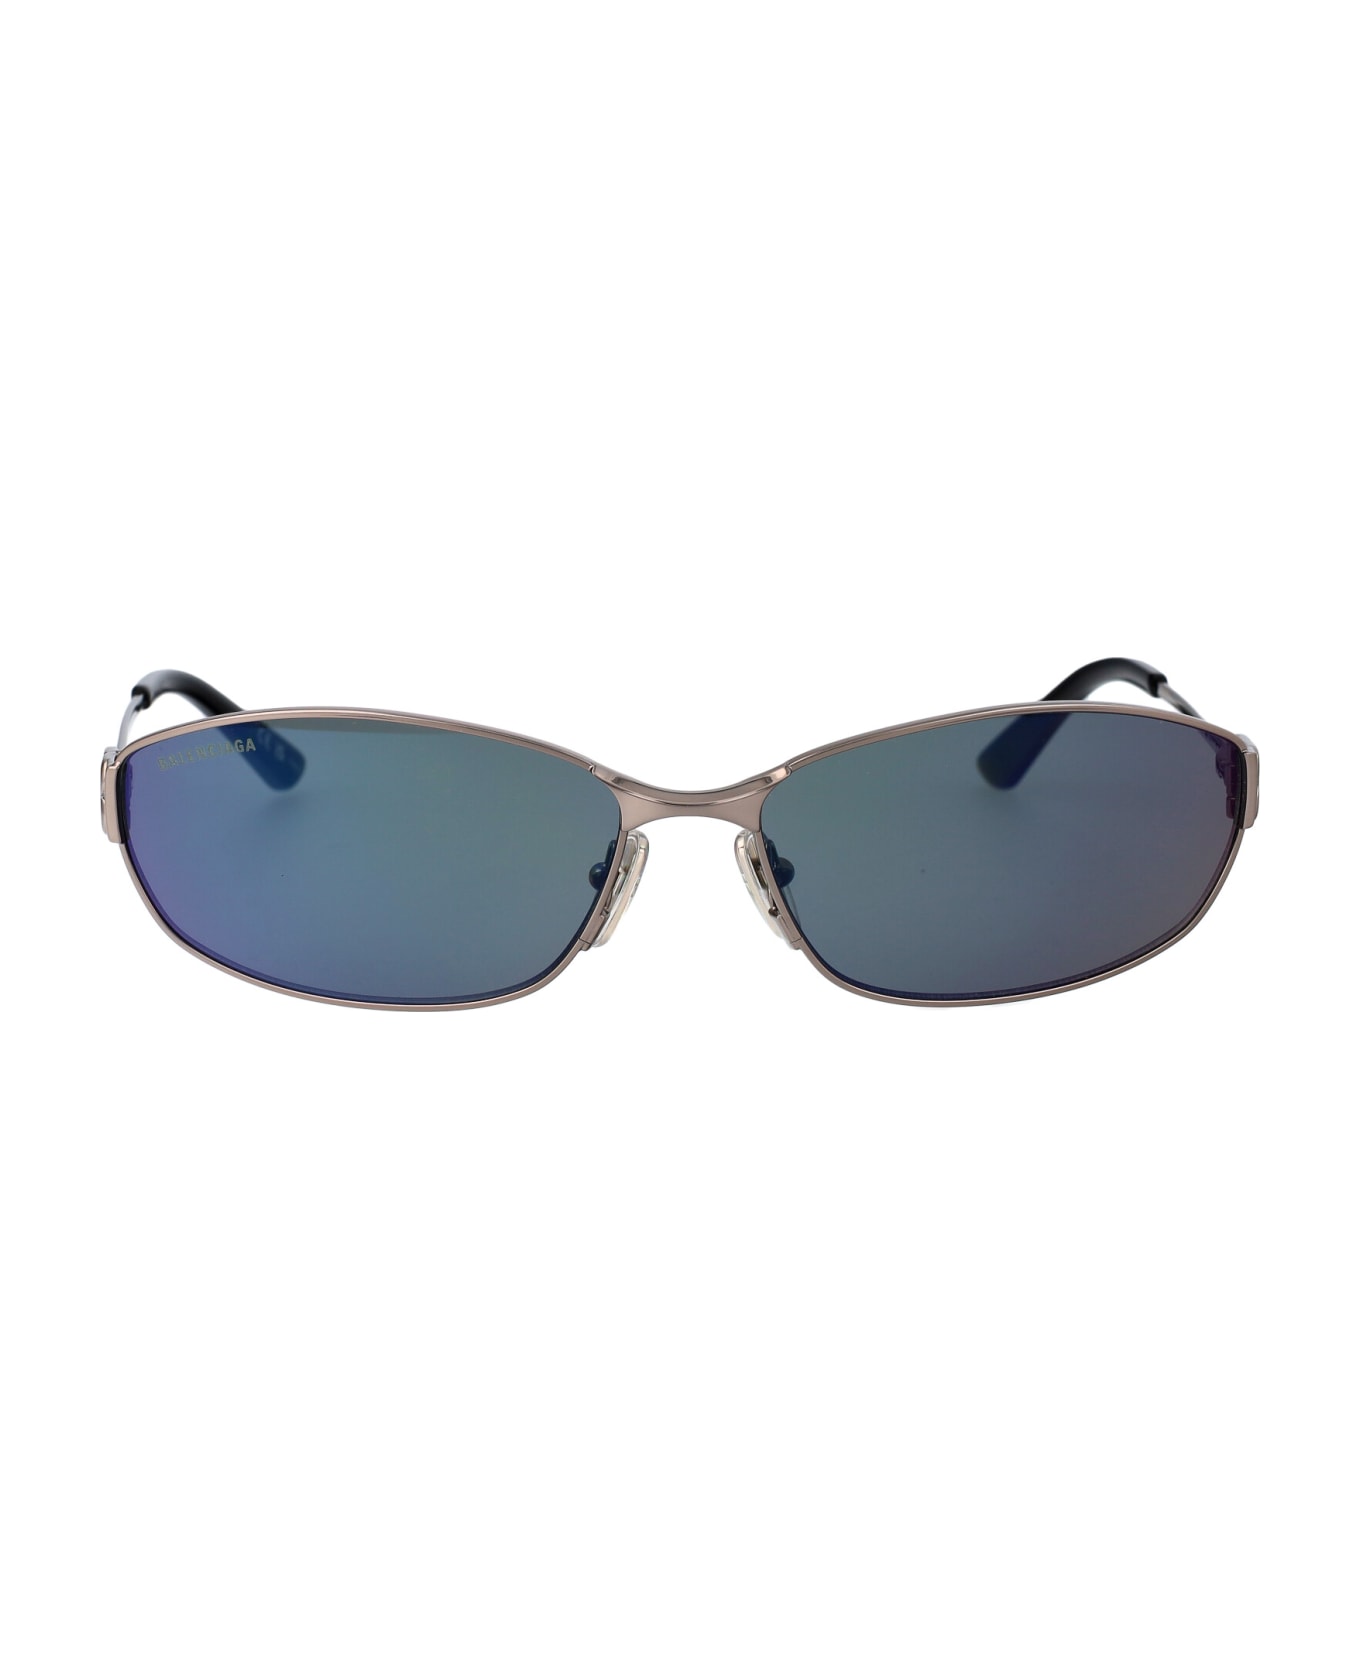 Balenciaga Eyewear Bb0336s Sunglasses - 002 RUTHENIUM RUTHENIUM VIOLET